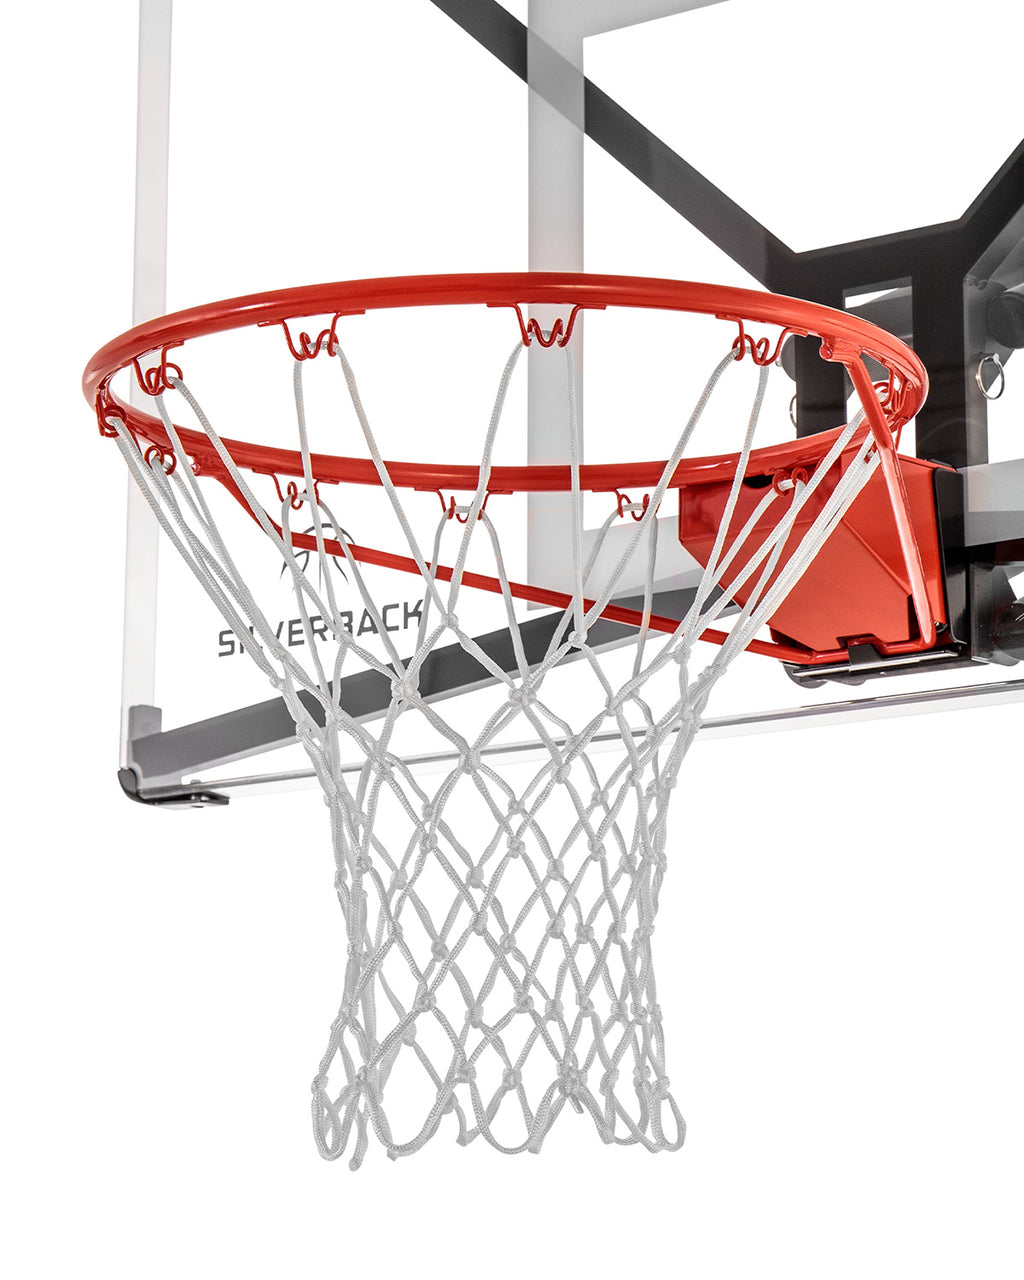 Spalding Standard Basketball Rim